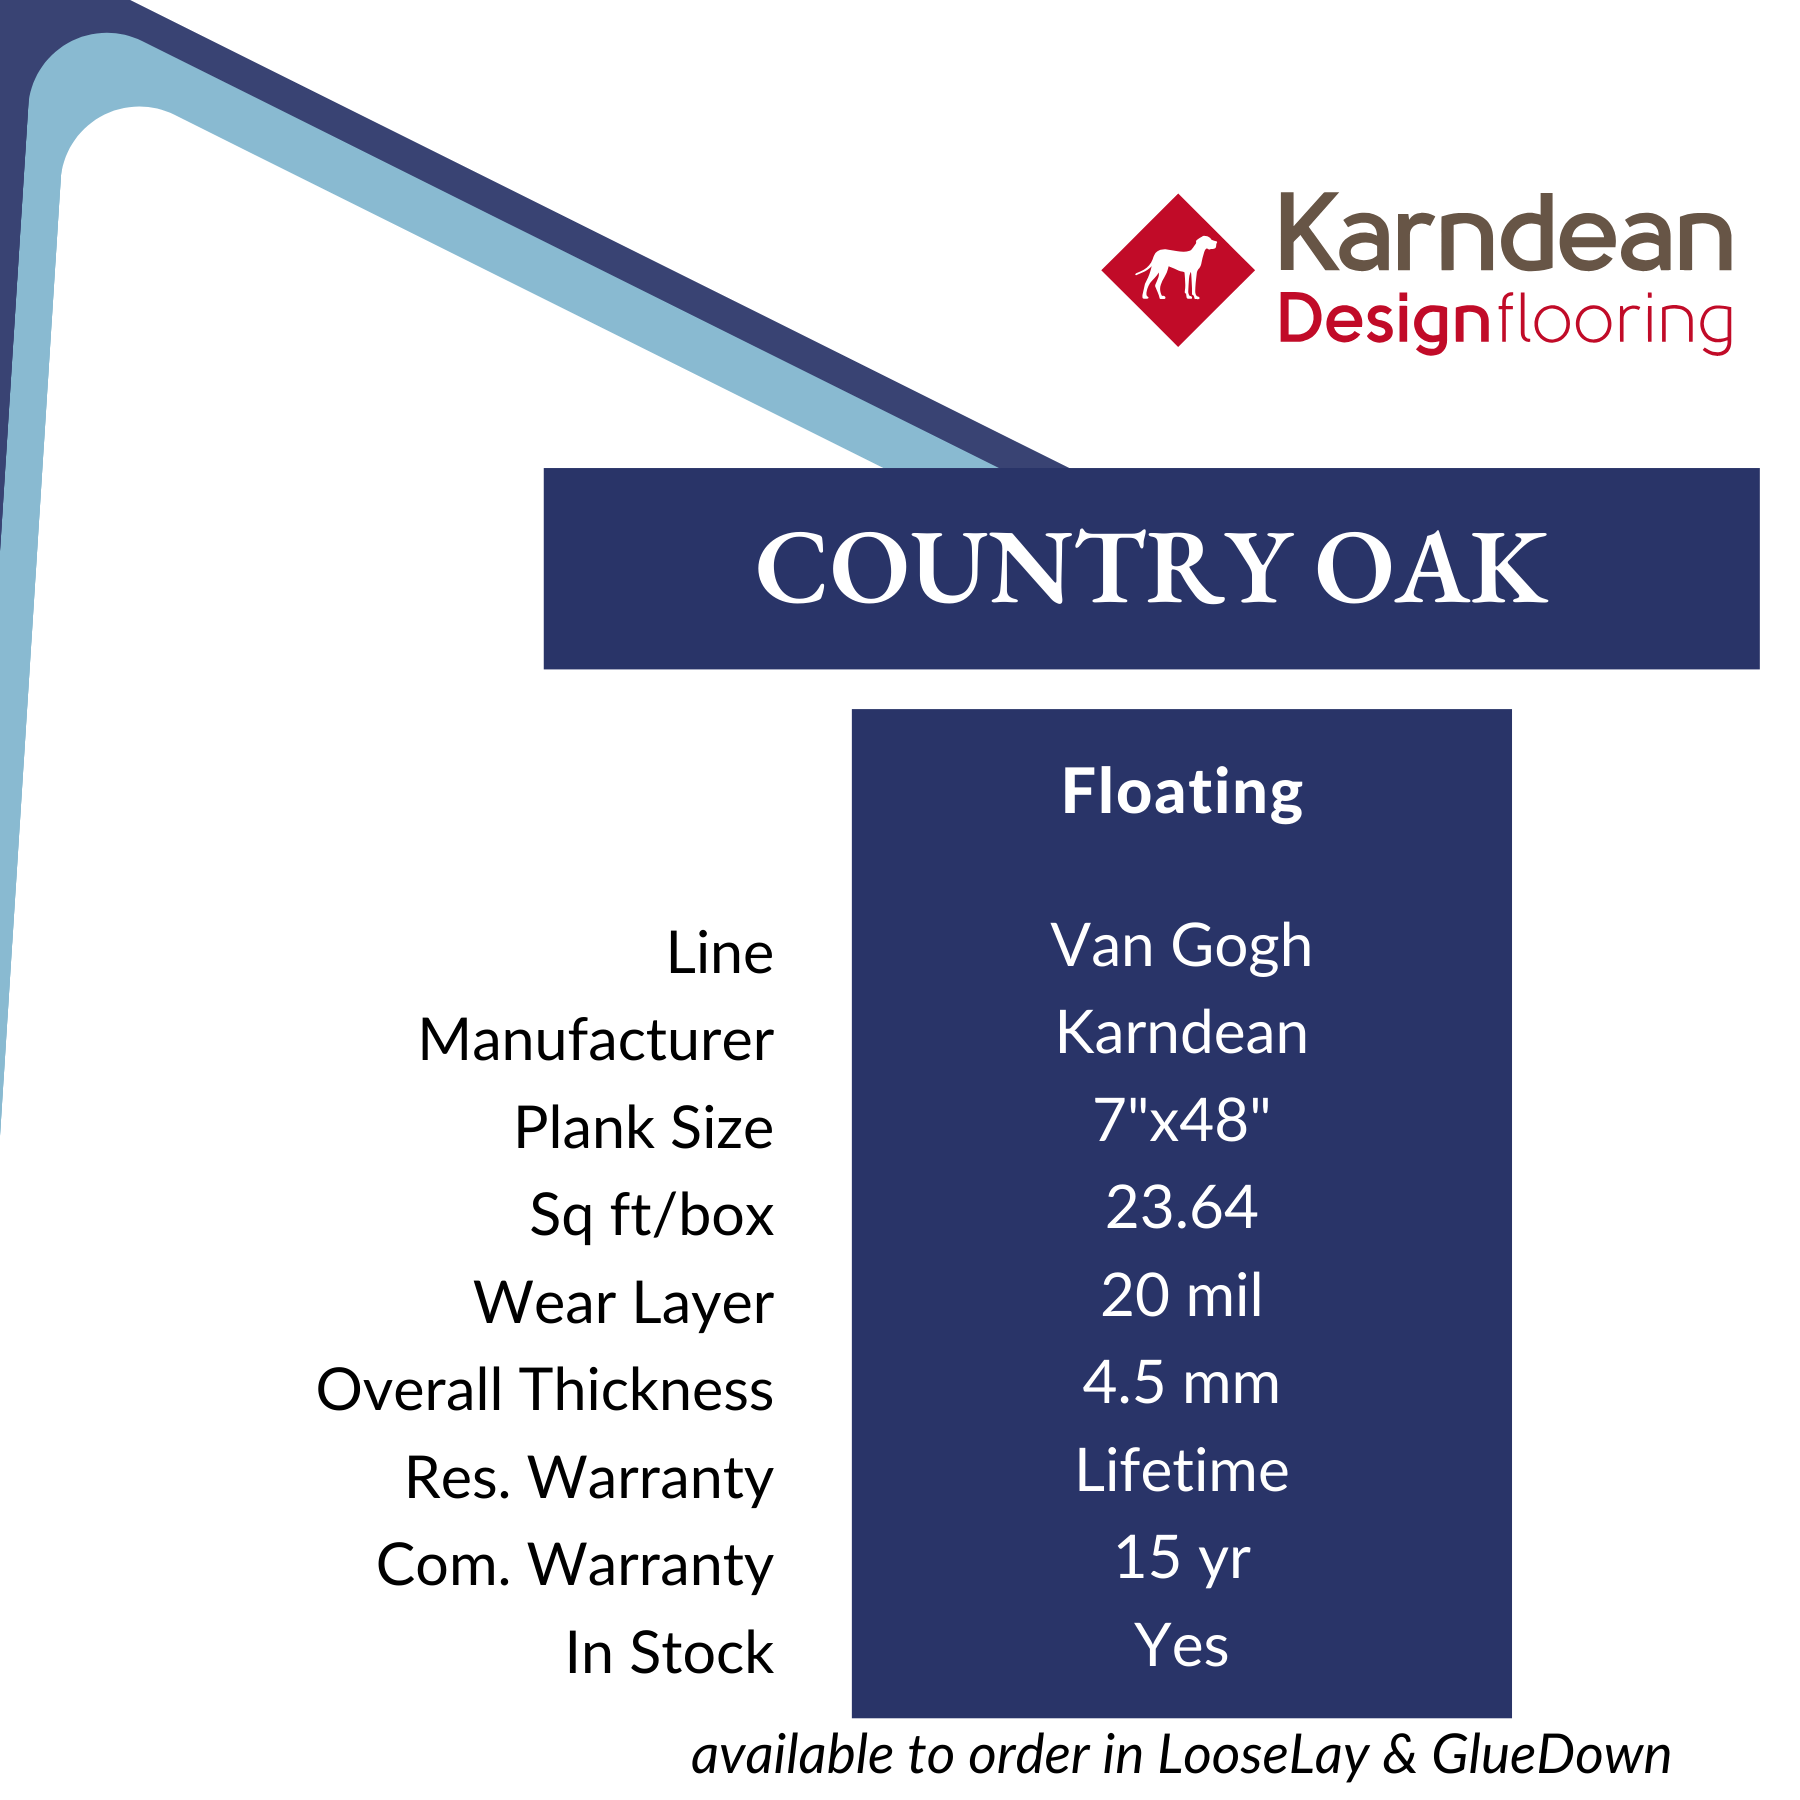 Country Oak Luxury Vinyl Flooring from Karndean, sold at Calhoun’s, Springfield, IL specs